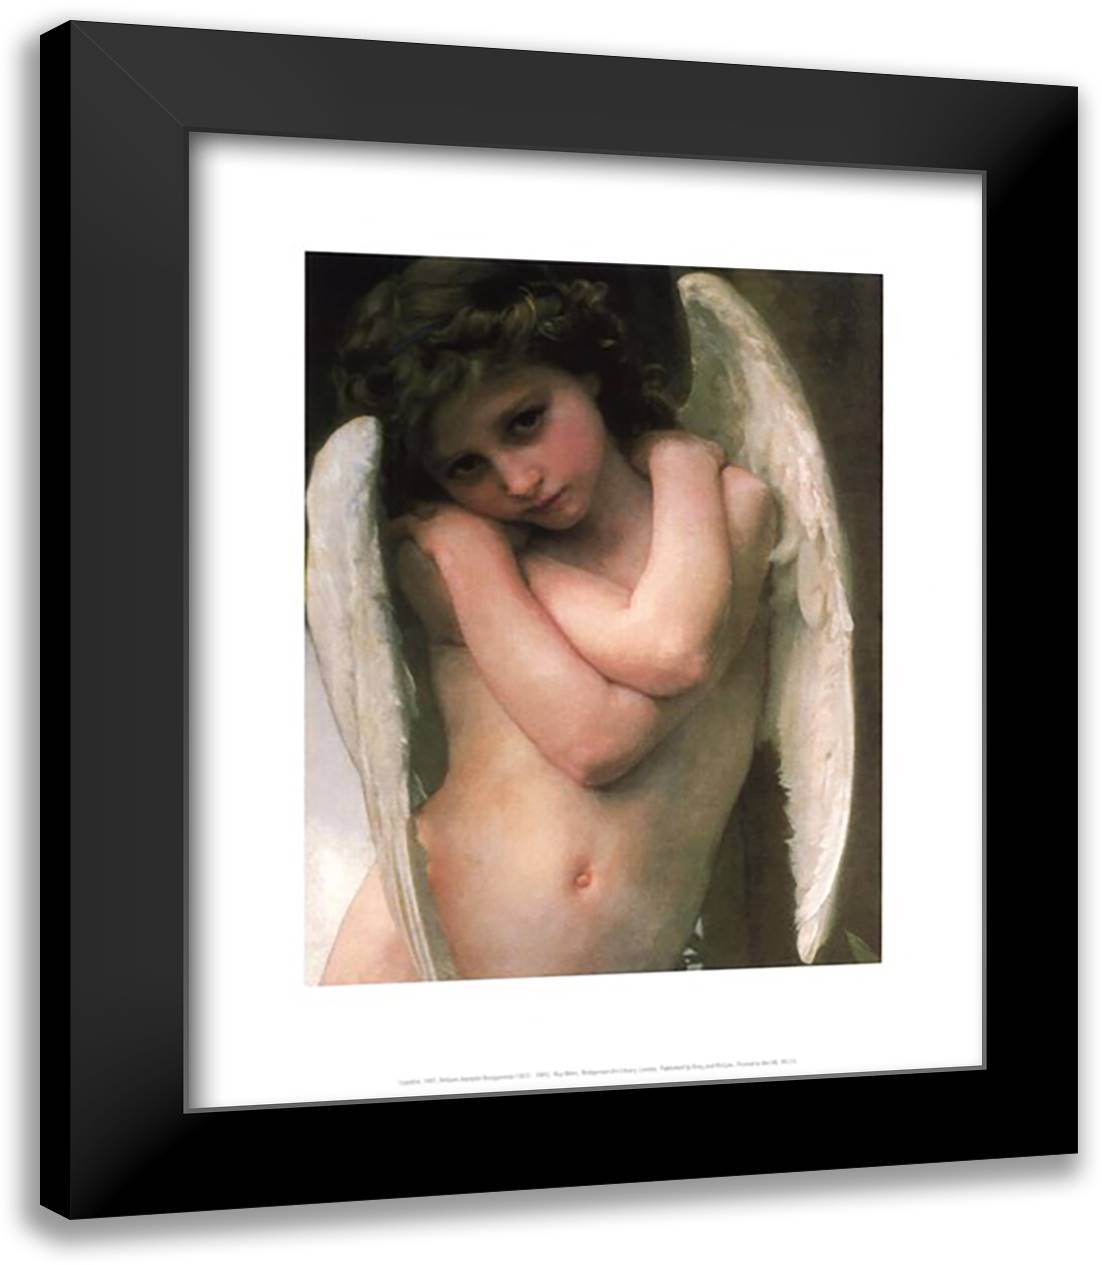 Cupidon 15x18 Black Modern Wood Framed Art Print Poster by Bouguereau, William